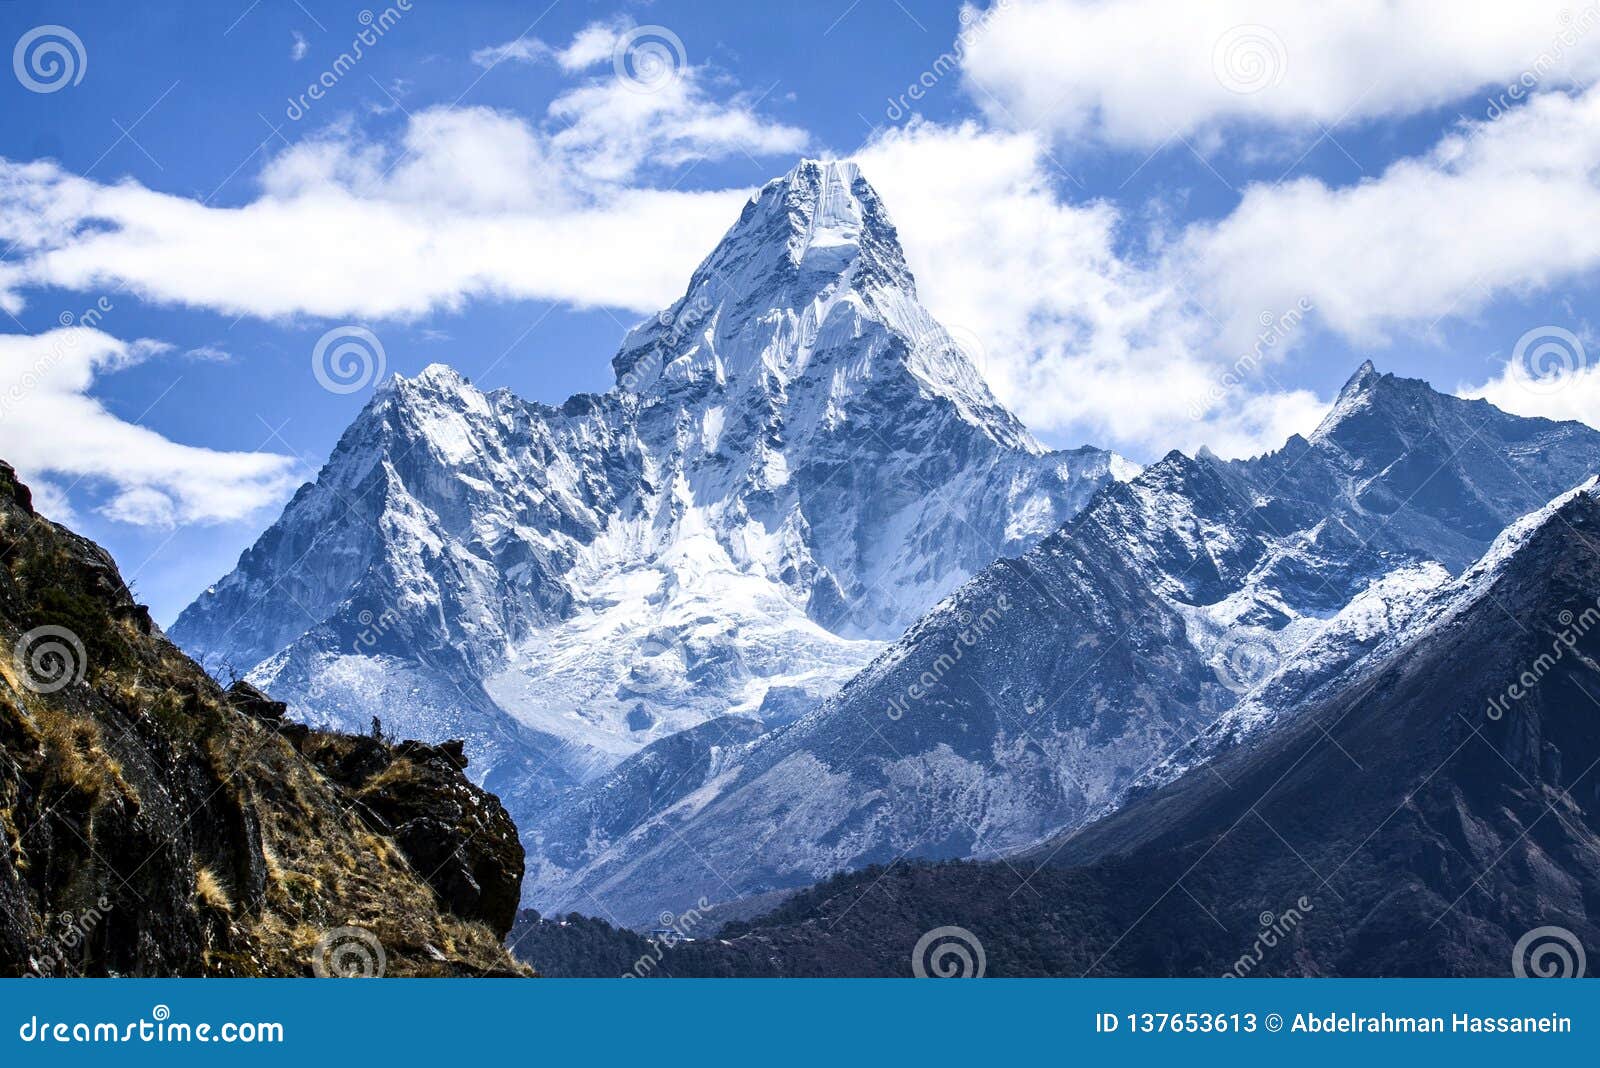 ama dablam, the most spectacular peak on everest region